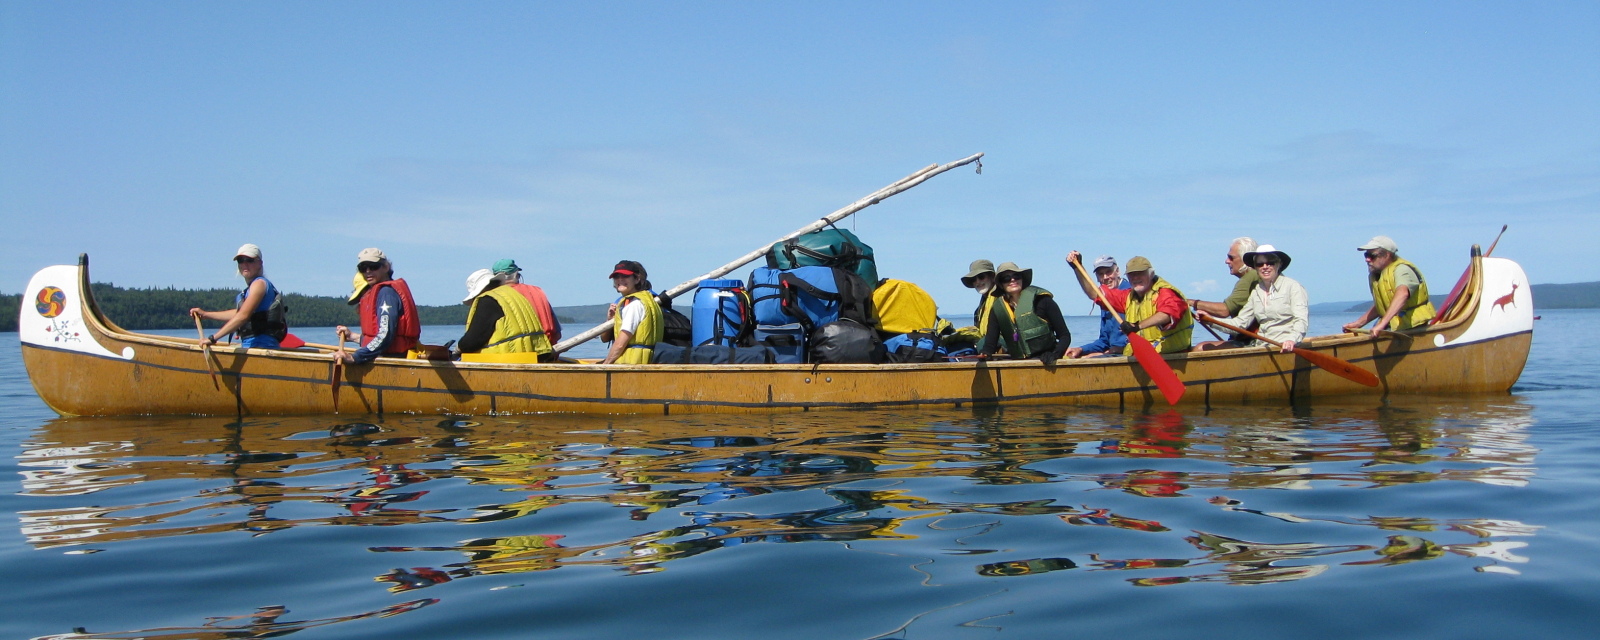 Voyageur Canoe Trip - Group of Seven Landscapes 